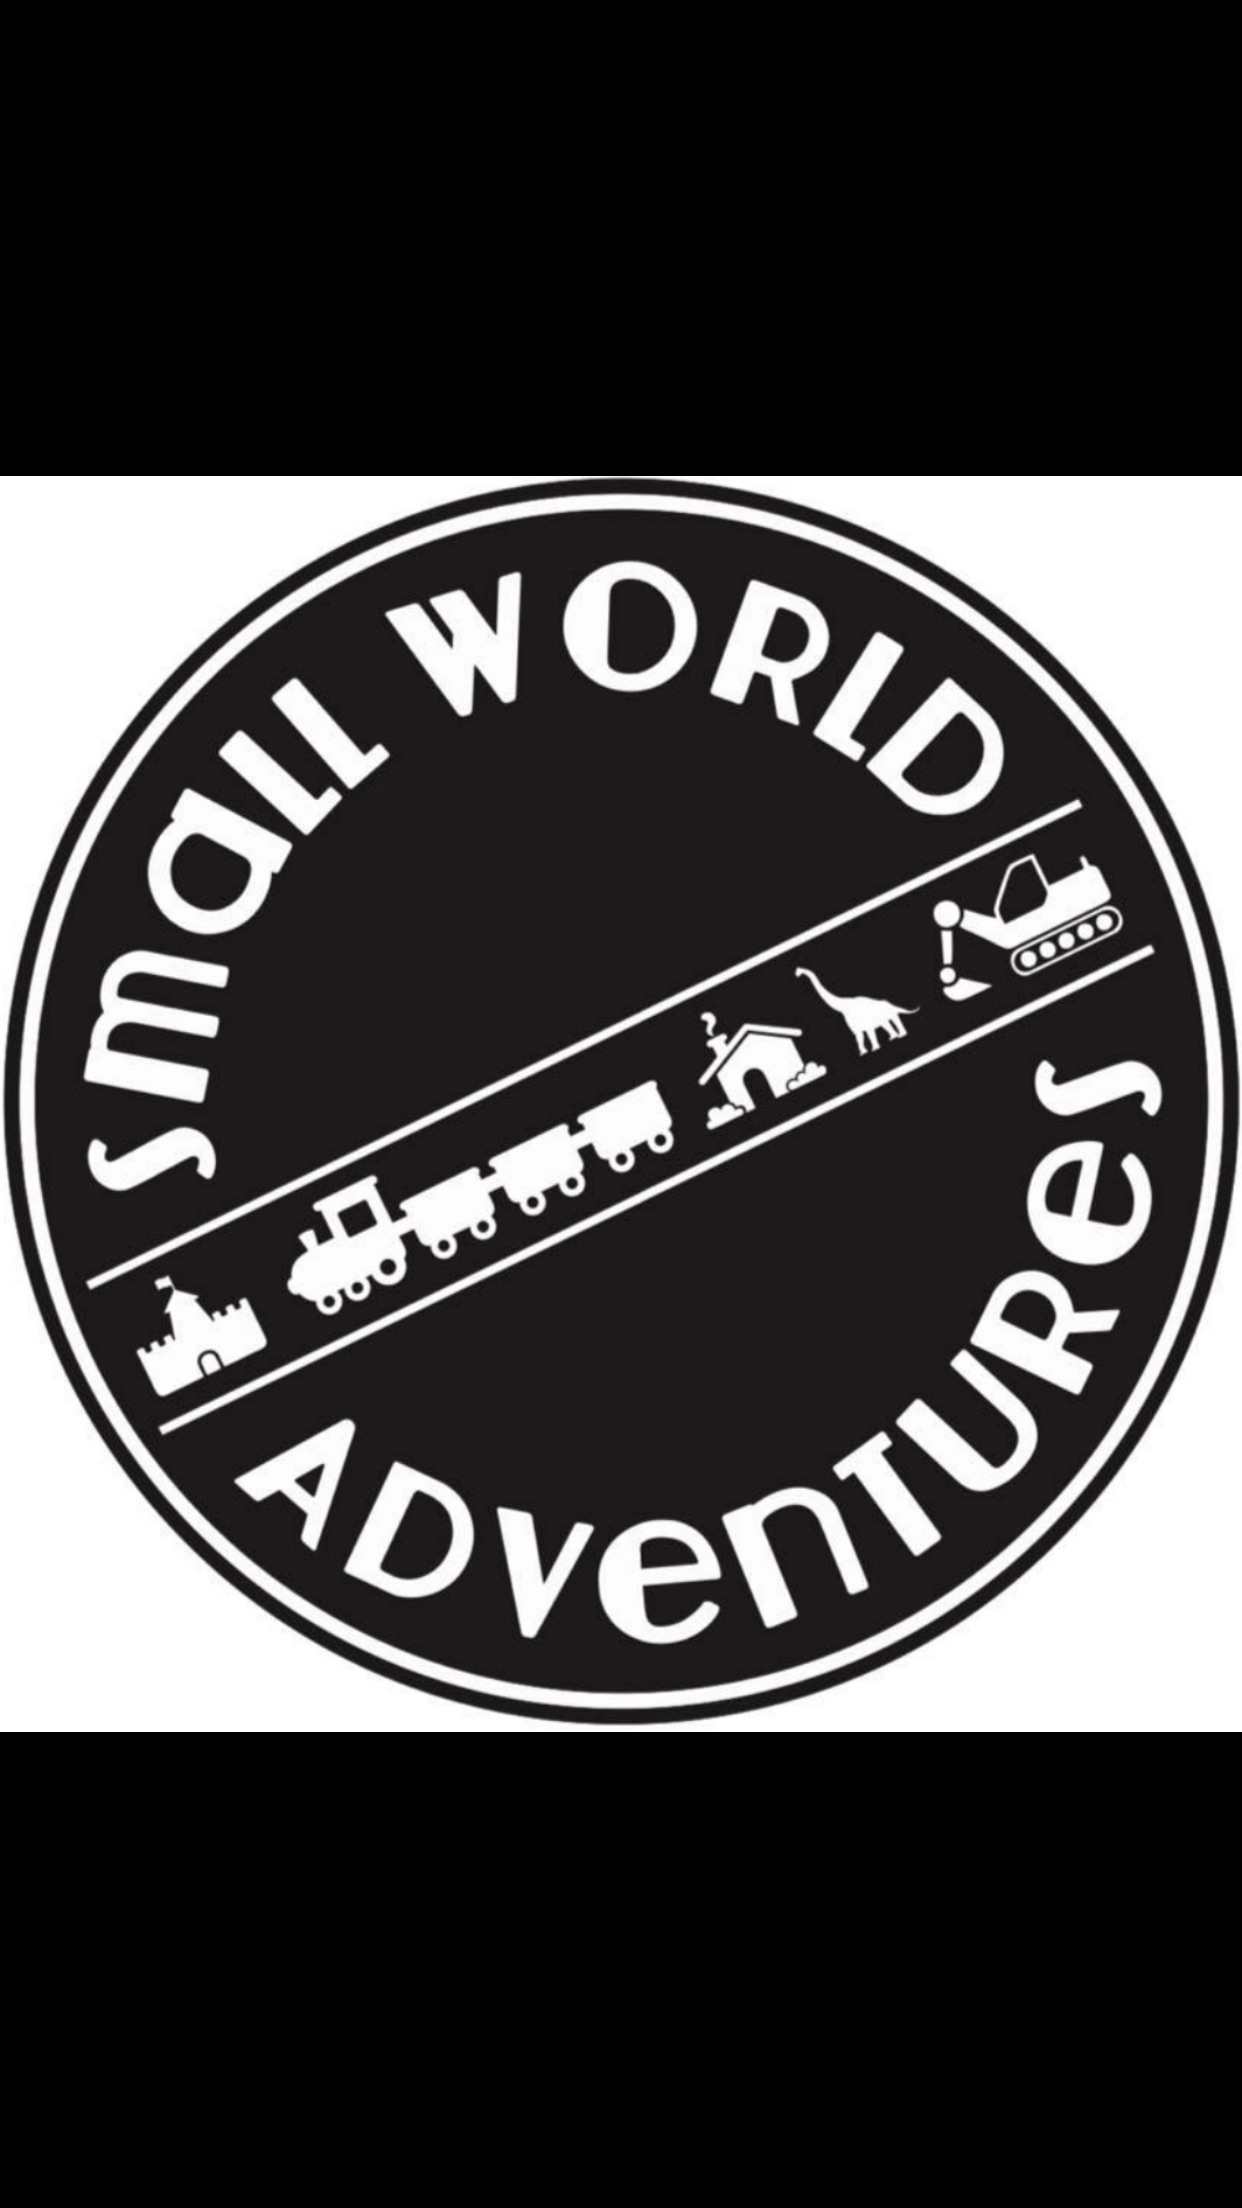 Small World Adventures's logo